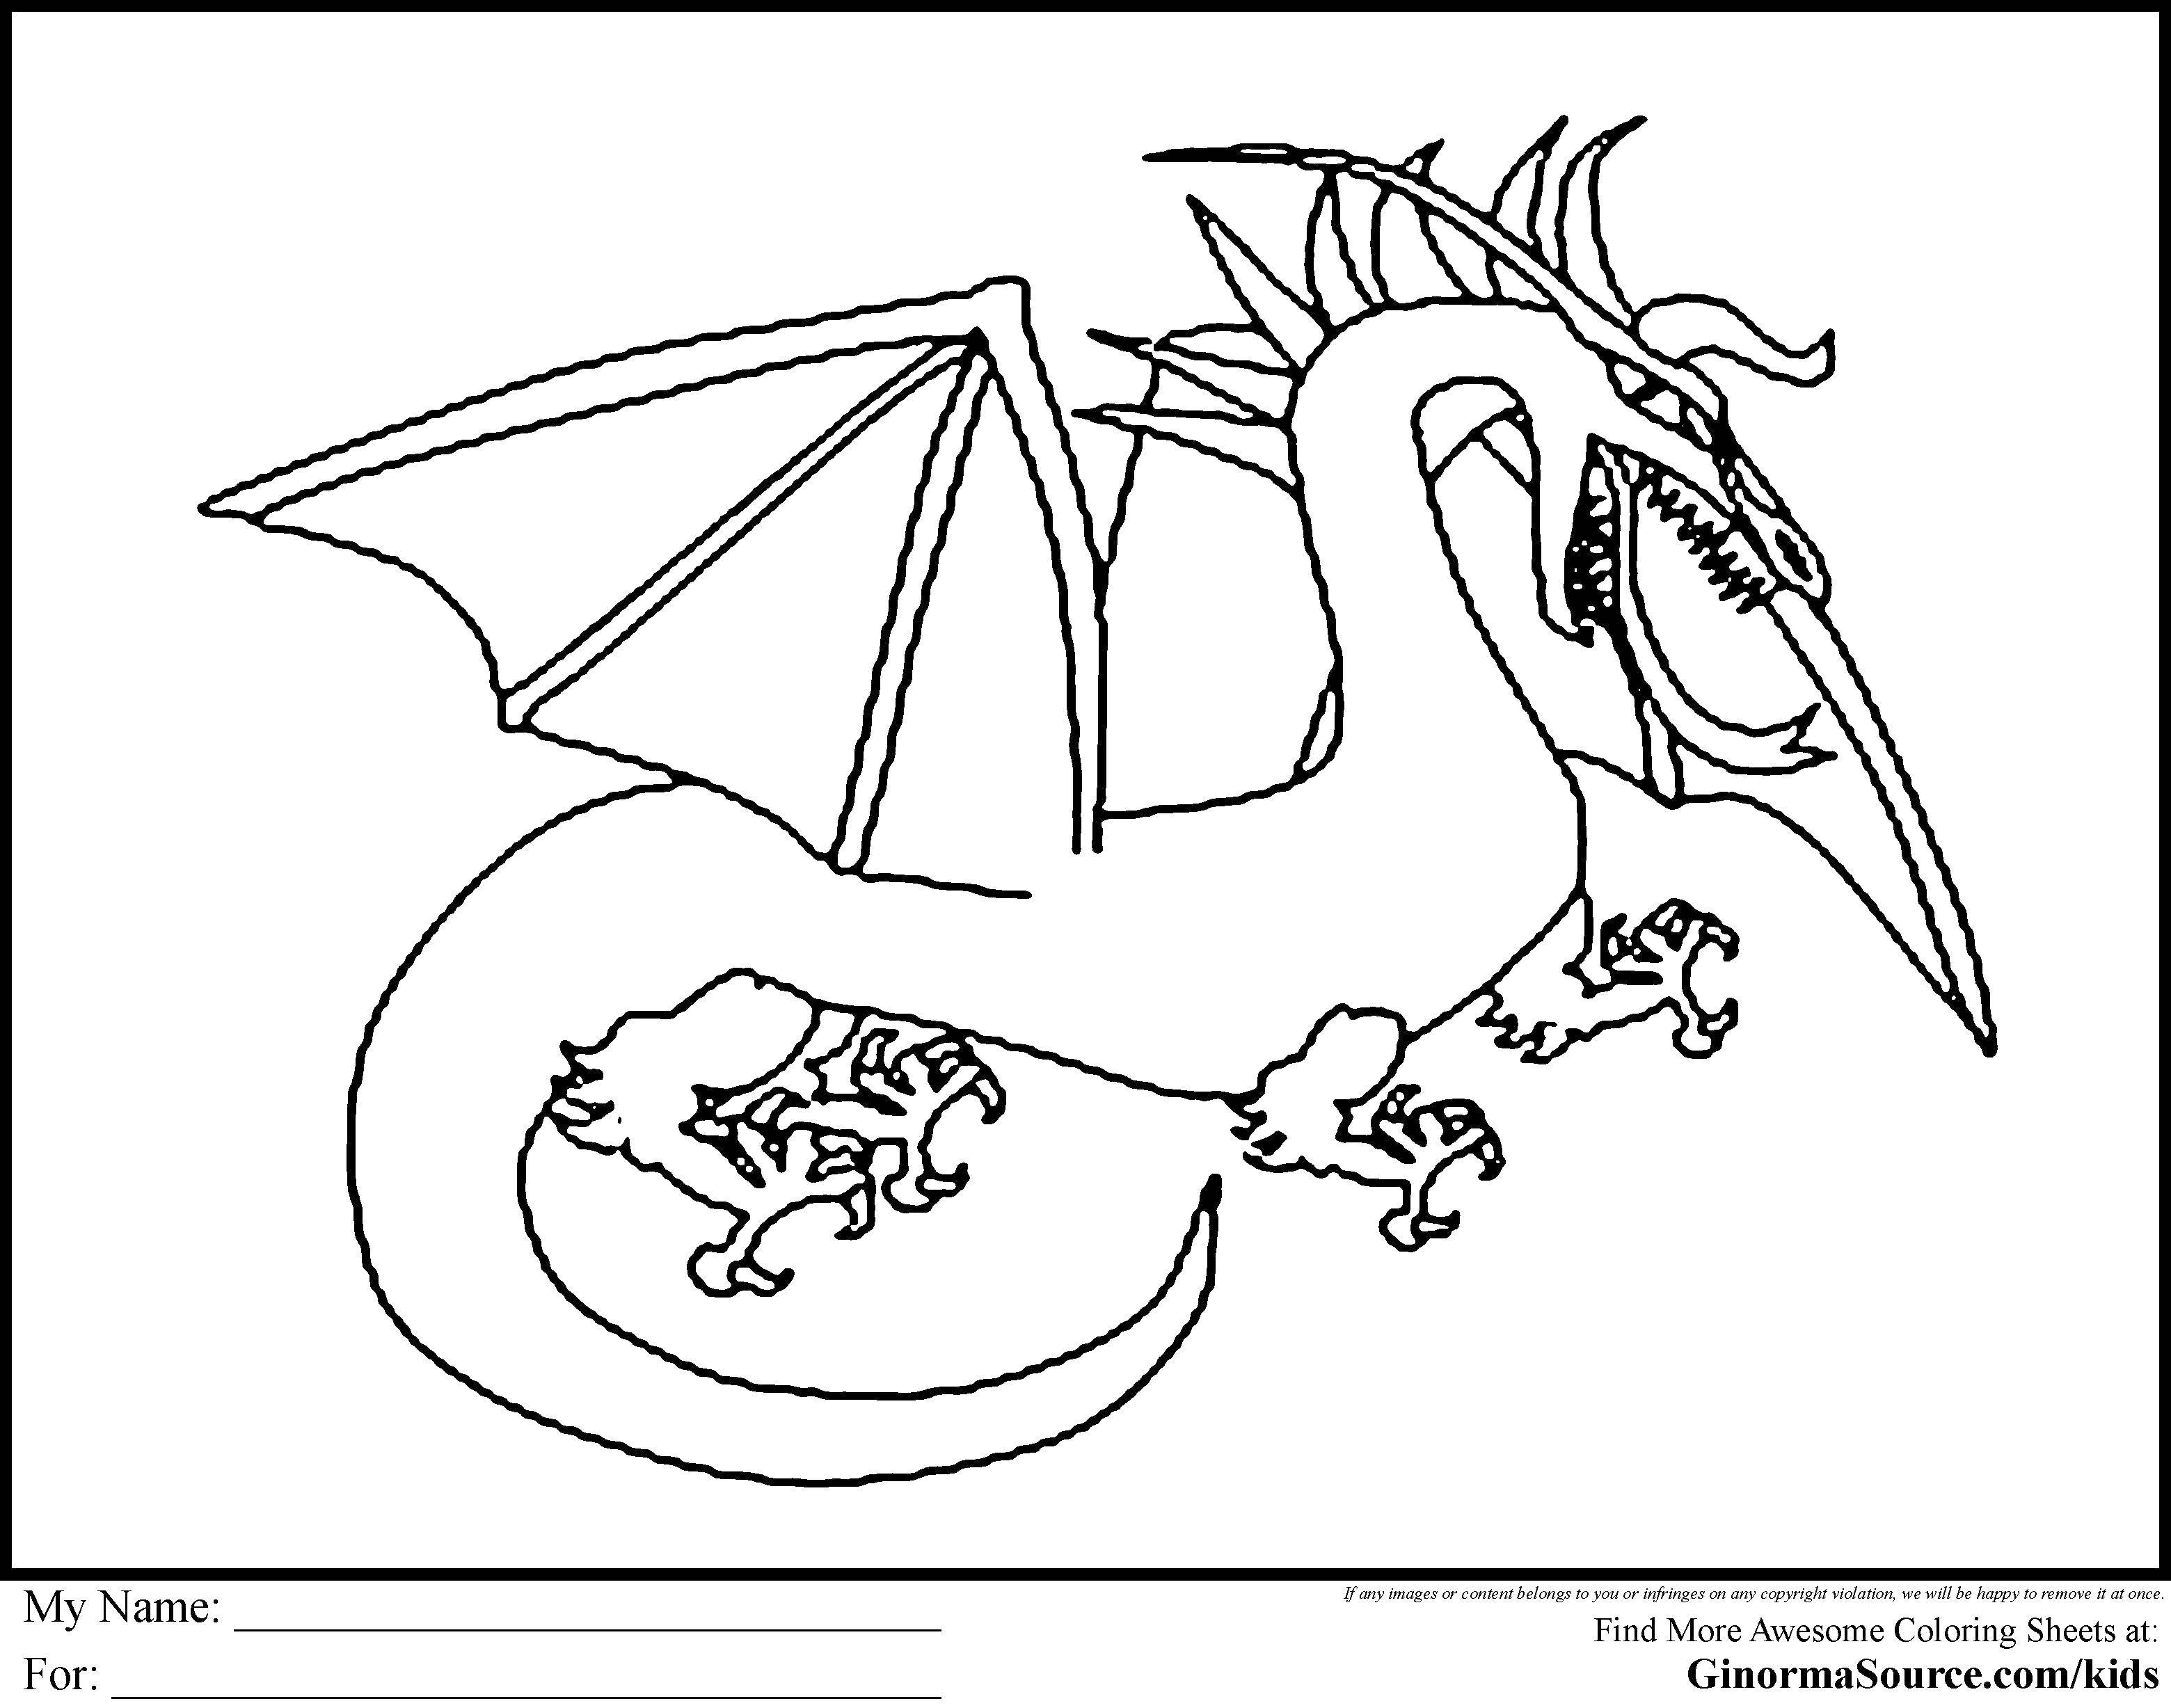 Coloring Flying dragon. Category Dragons. Tags:  dragons, dragon, wings.